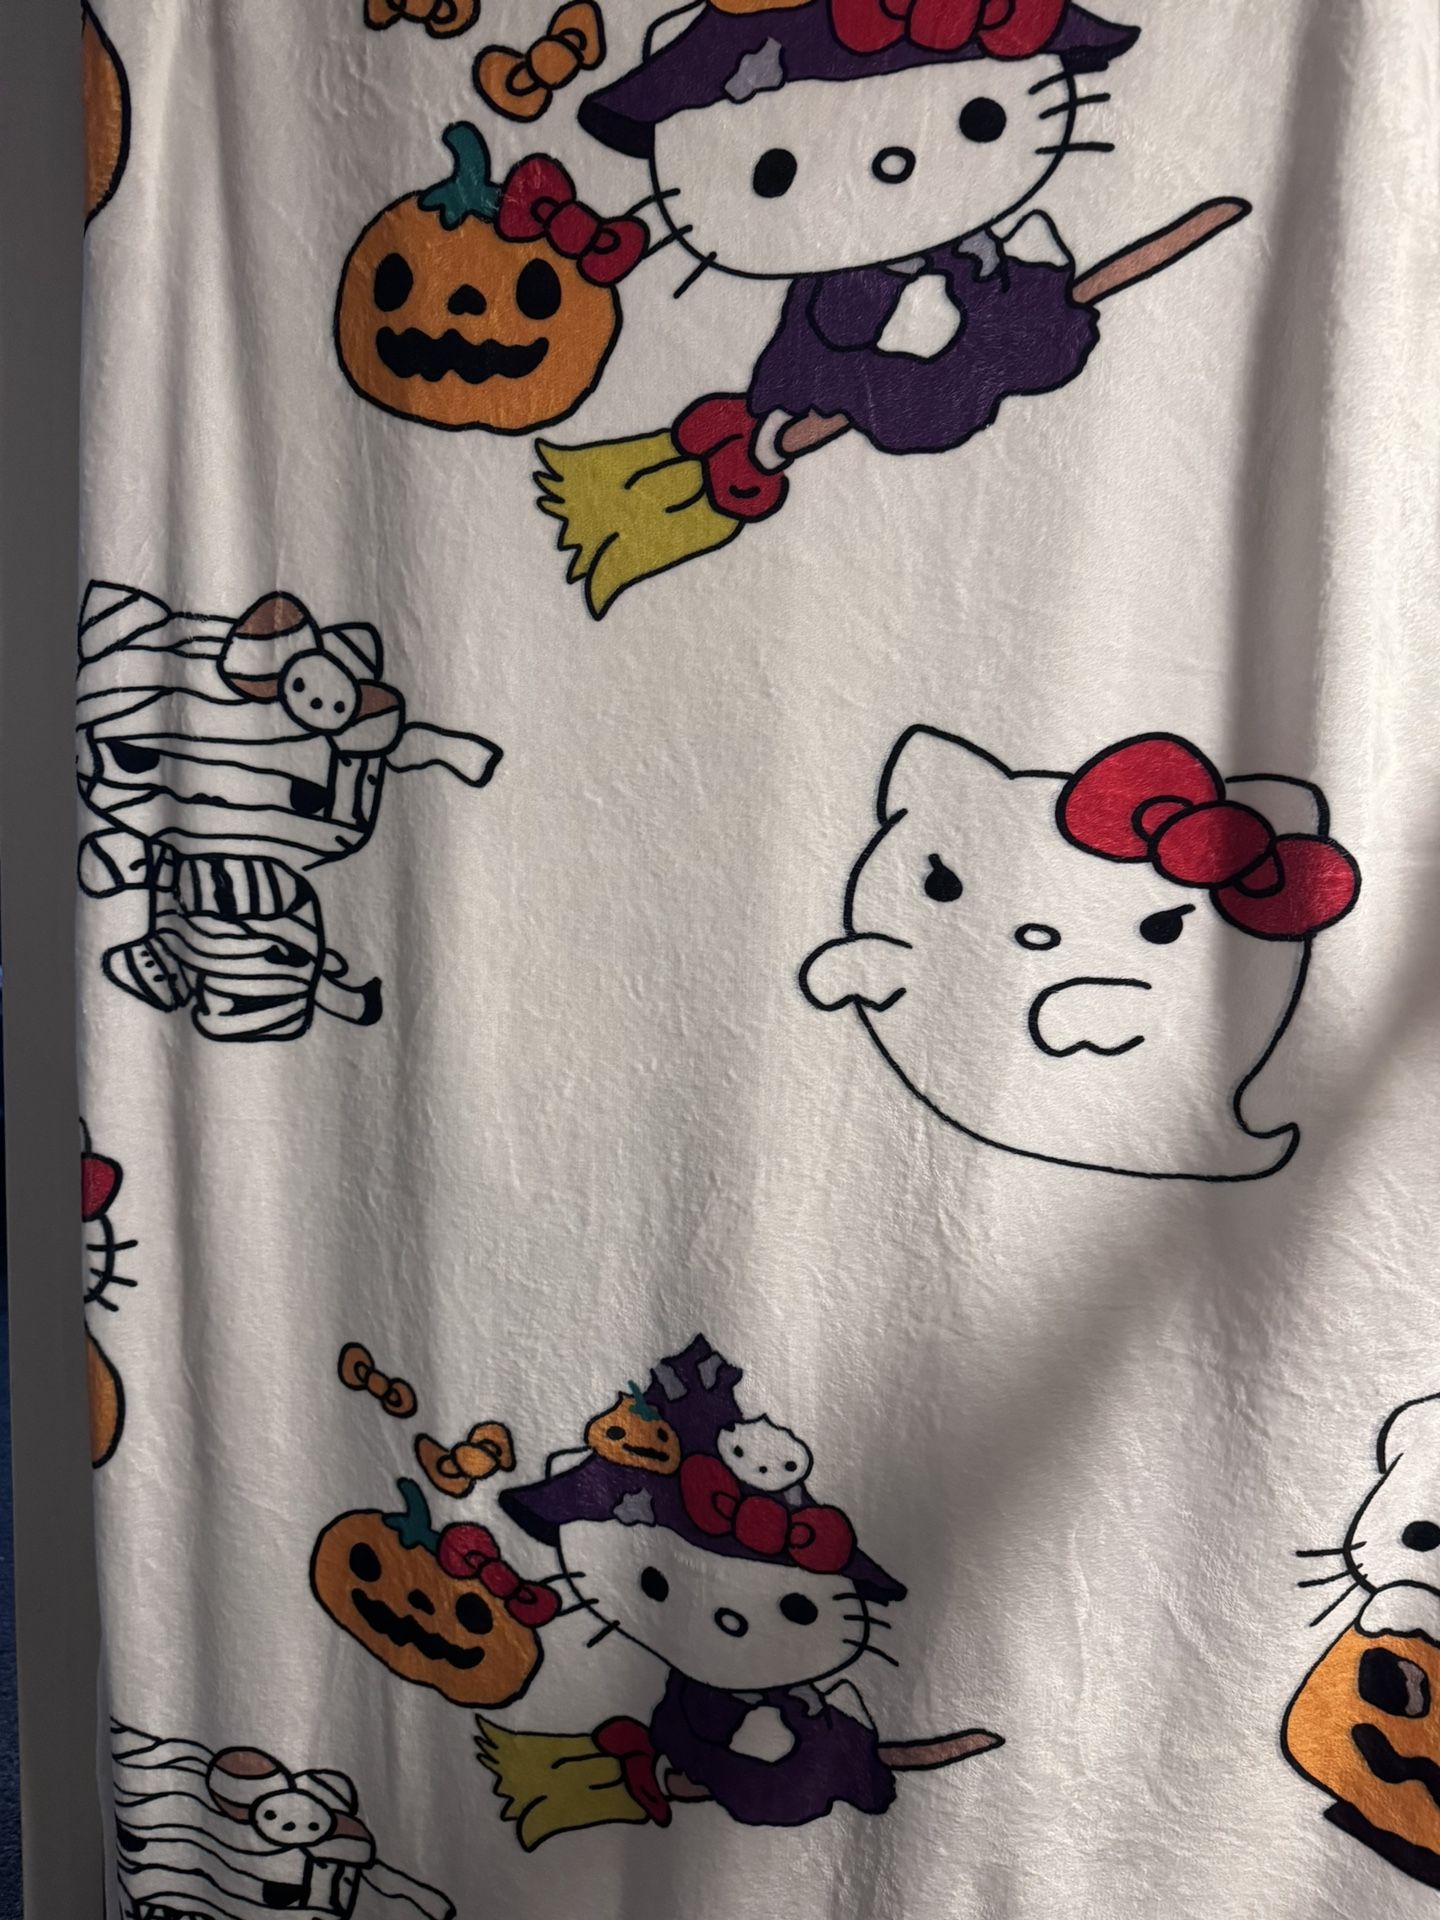 NWOT Hello Kitty Flannel Blanket